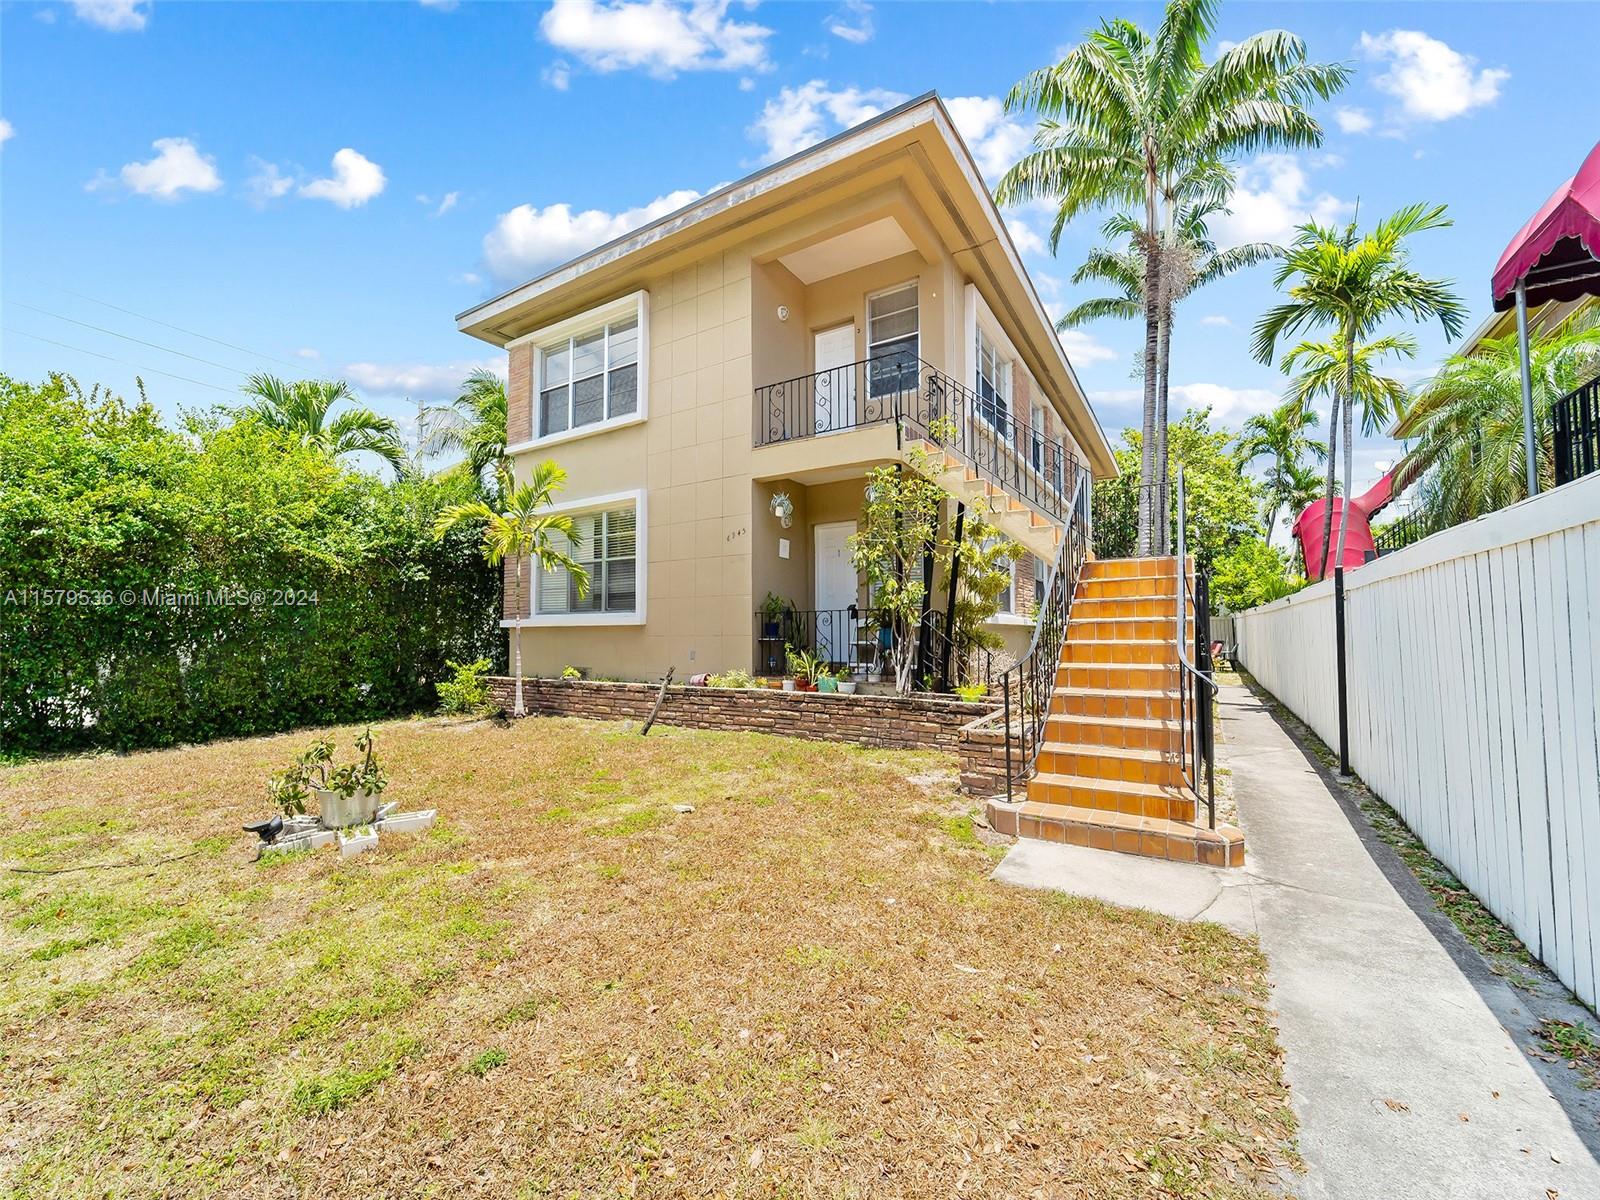 Rental Property at 6945 Rue Vendome 1-4, Miami Beach, Miami-Dade County, Florida -  - $1,380,000 MO.